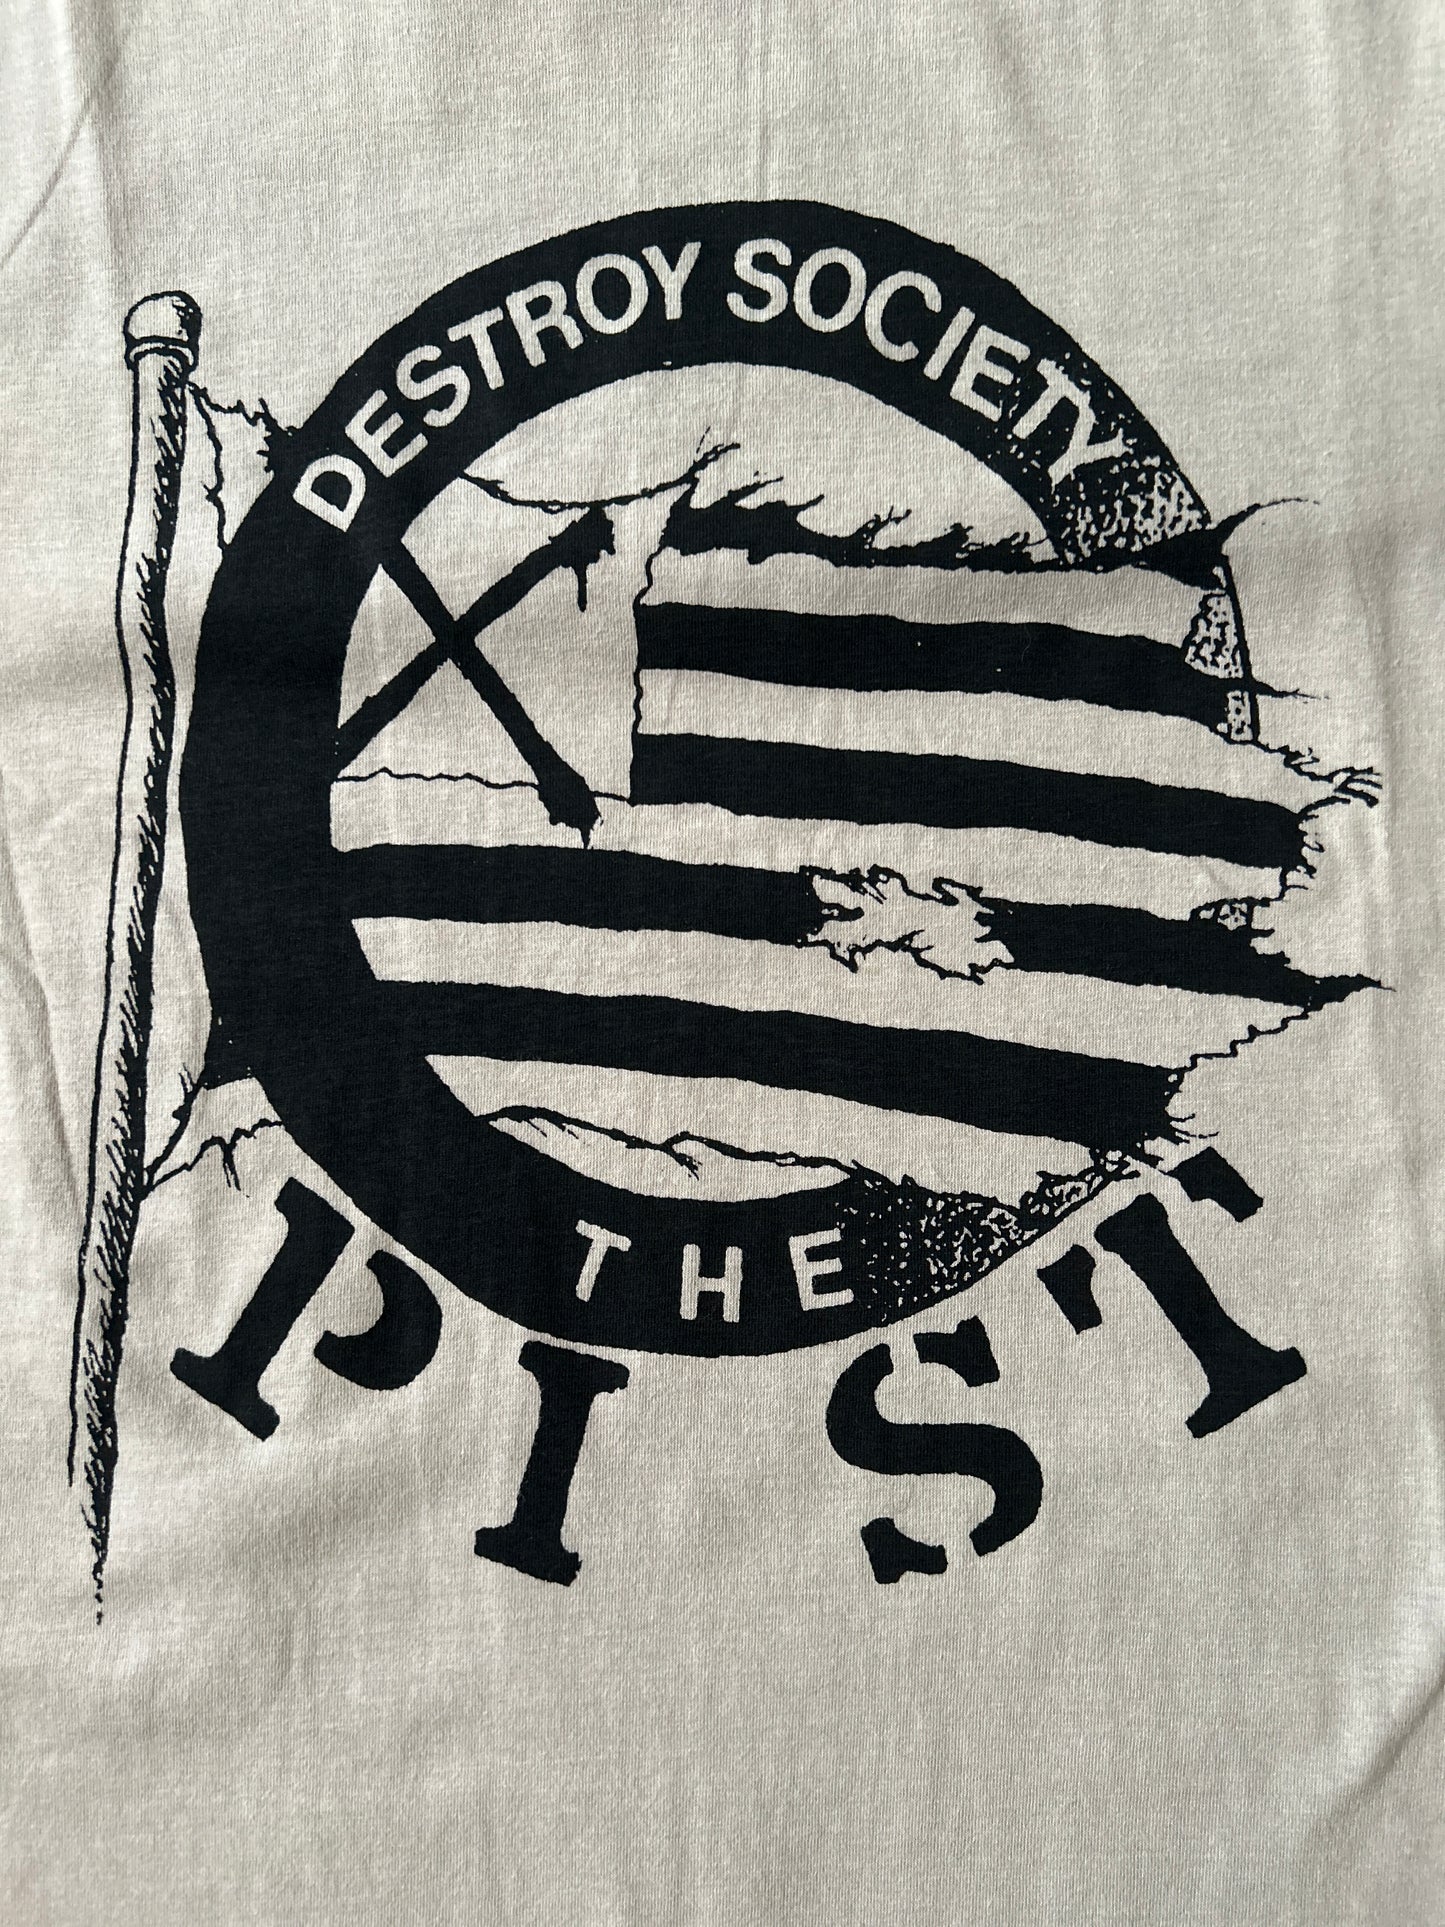 The PIST “Destroy Society” Tee